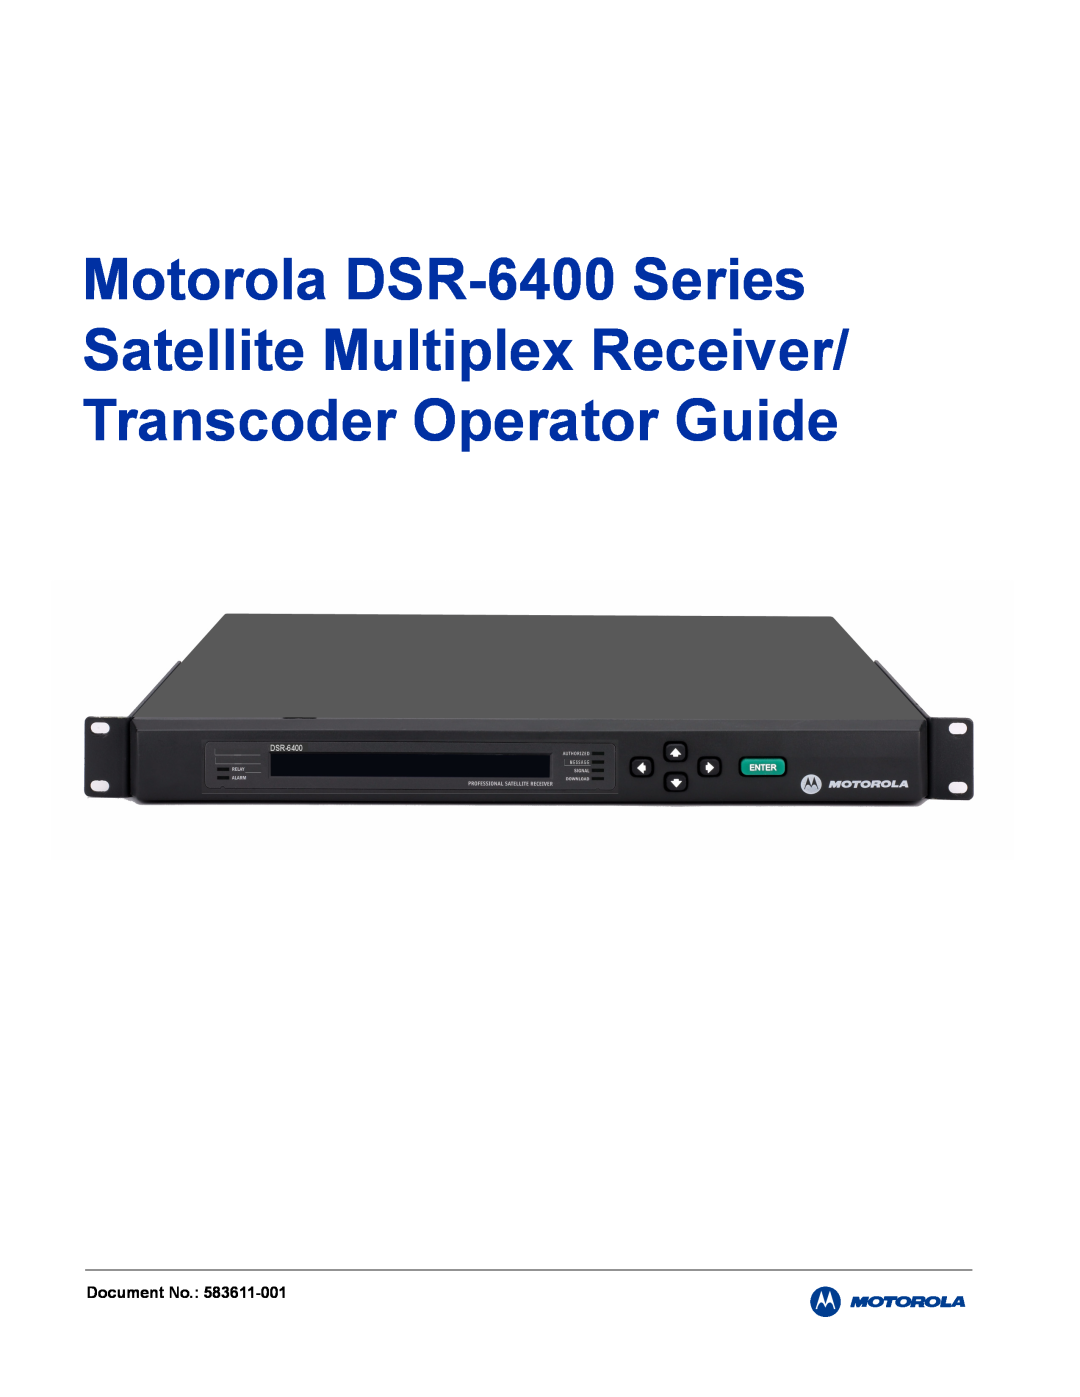 Motorola manual Motorola DSR-6400Series, Satellite Multiplex Receiver, Transcoder Operator Guide, Document No, Relay 